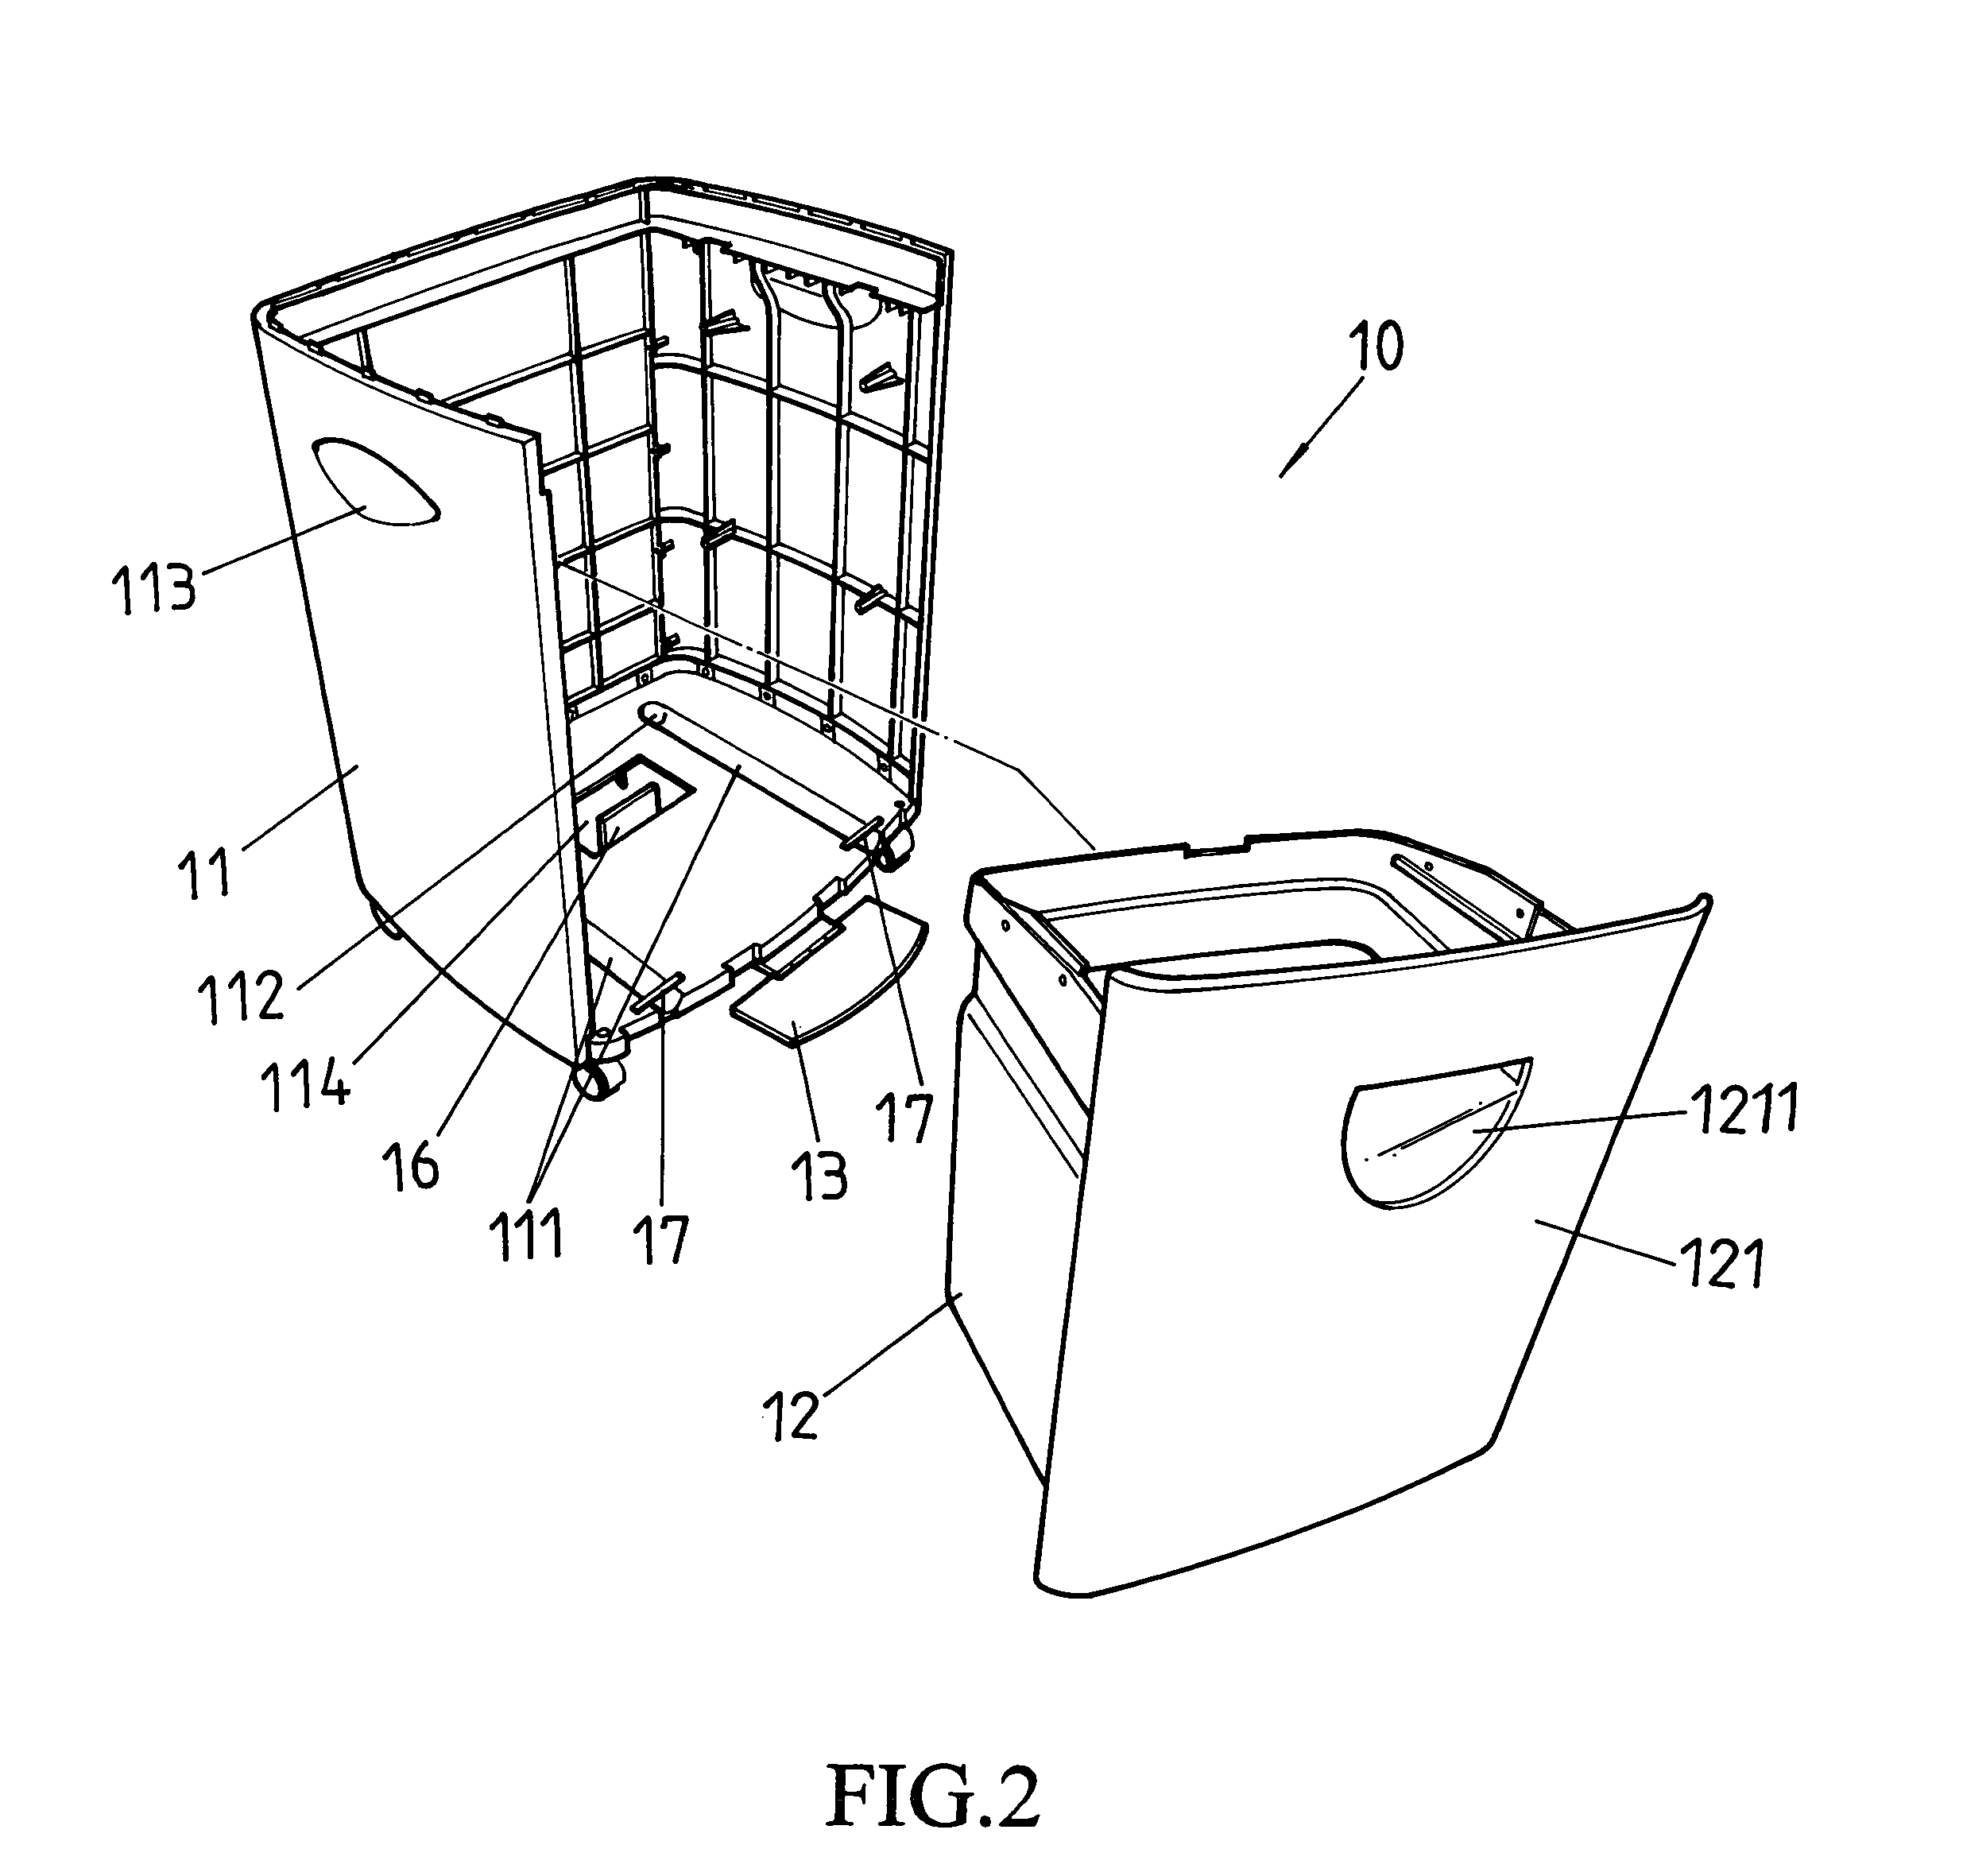 Foot-driven device for displacing a paper shredder bin